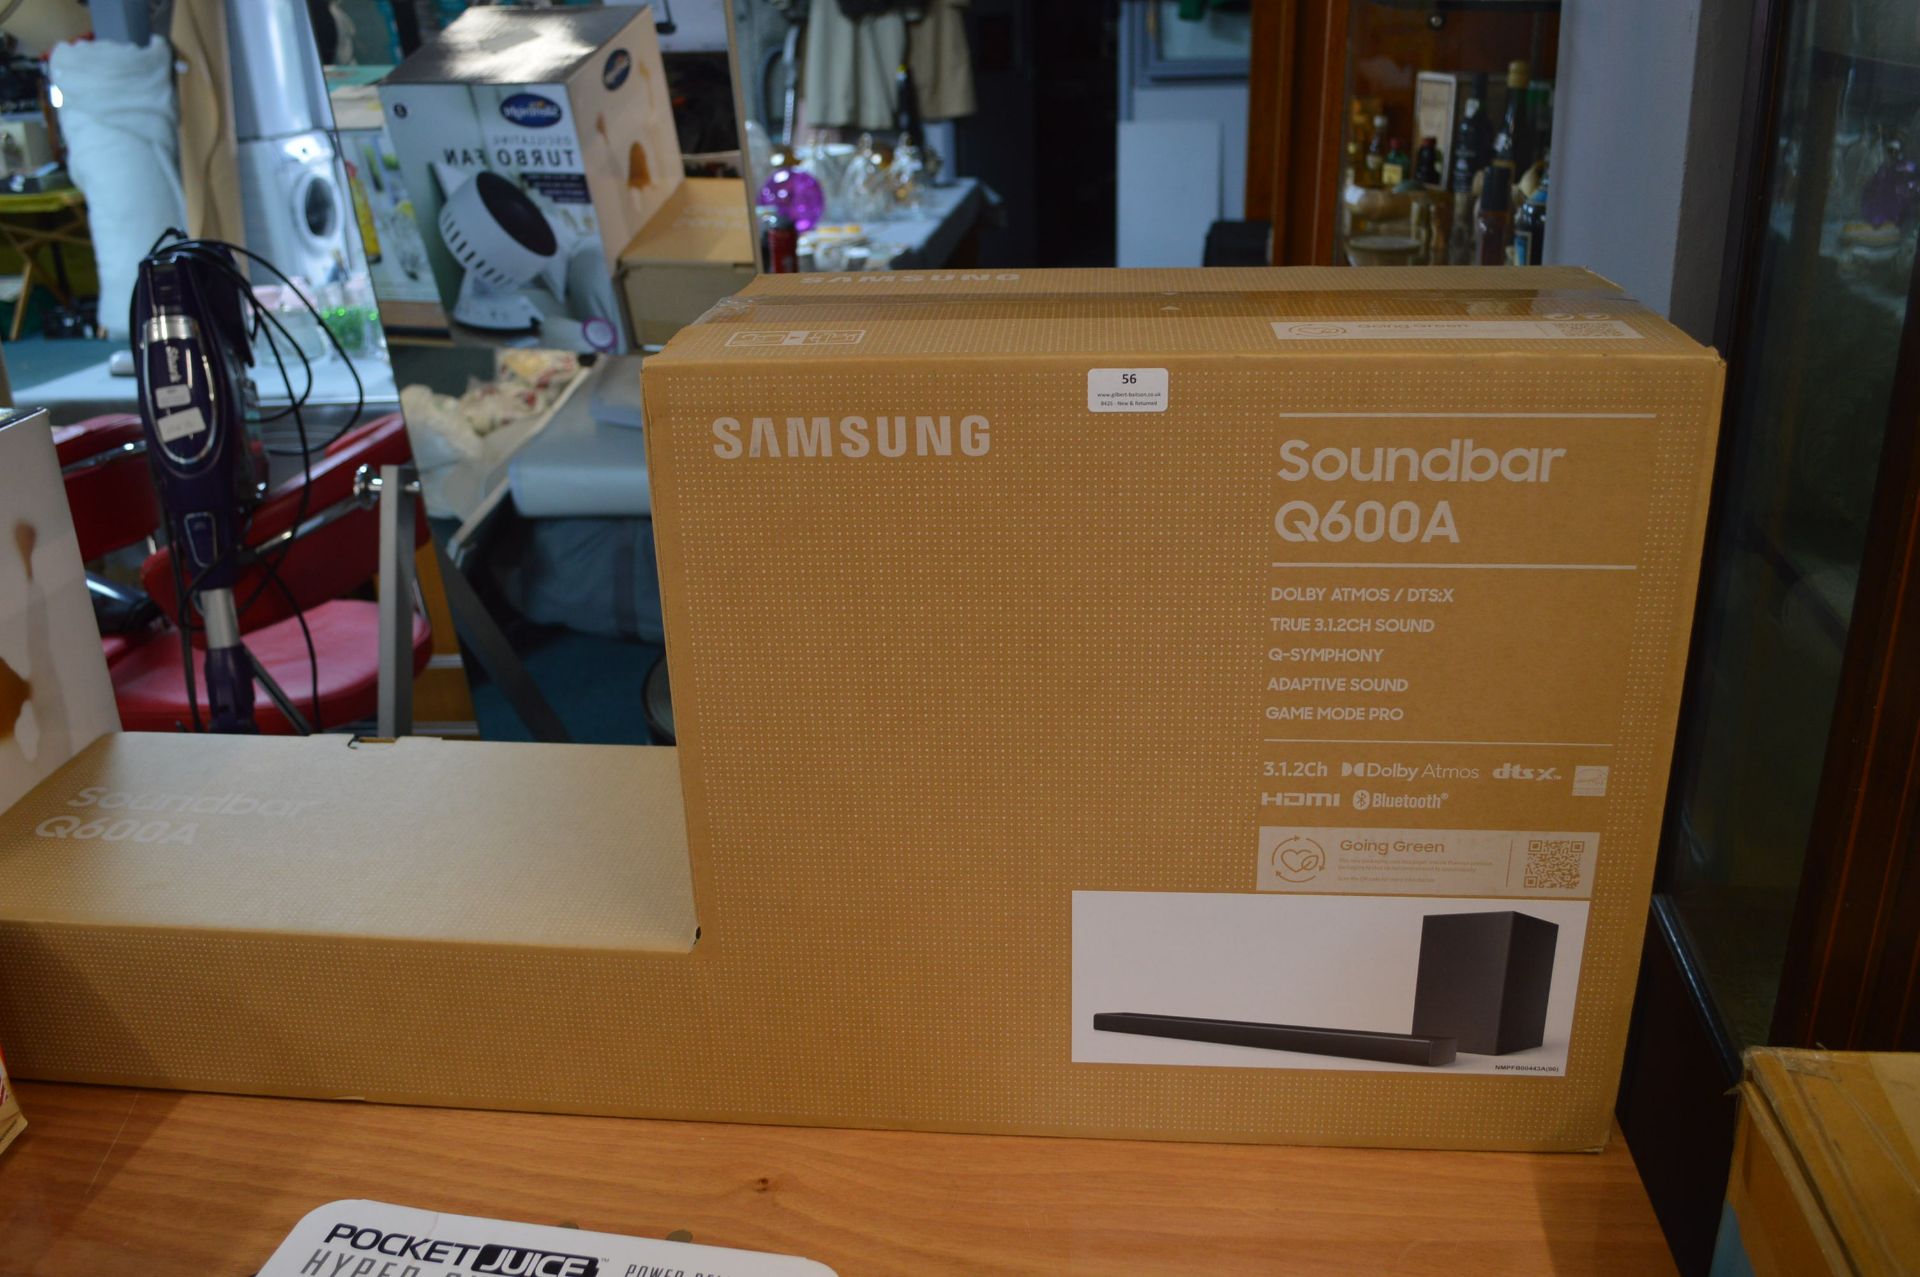 *Samsung 2600A Soundbar